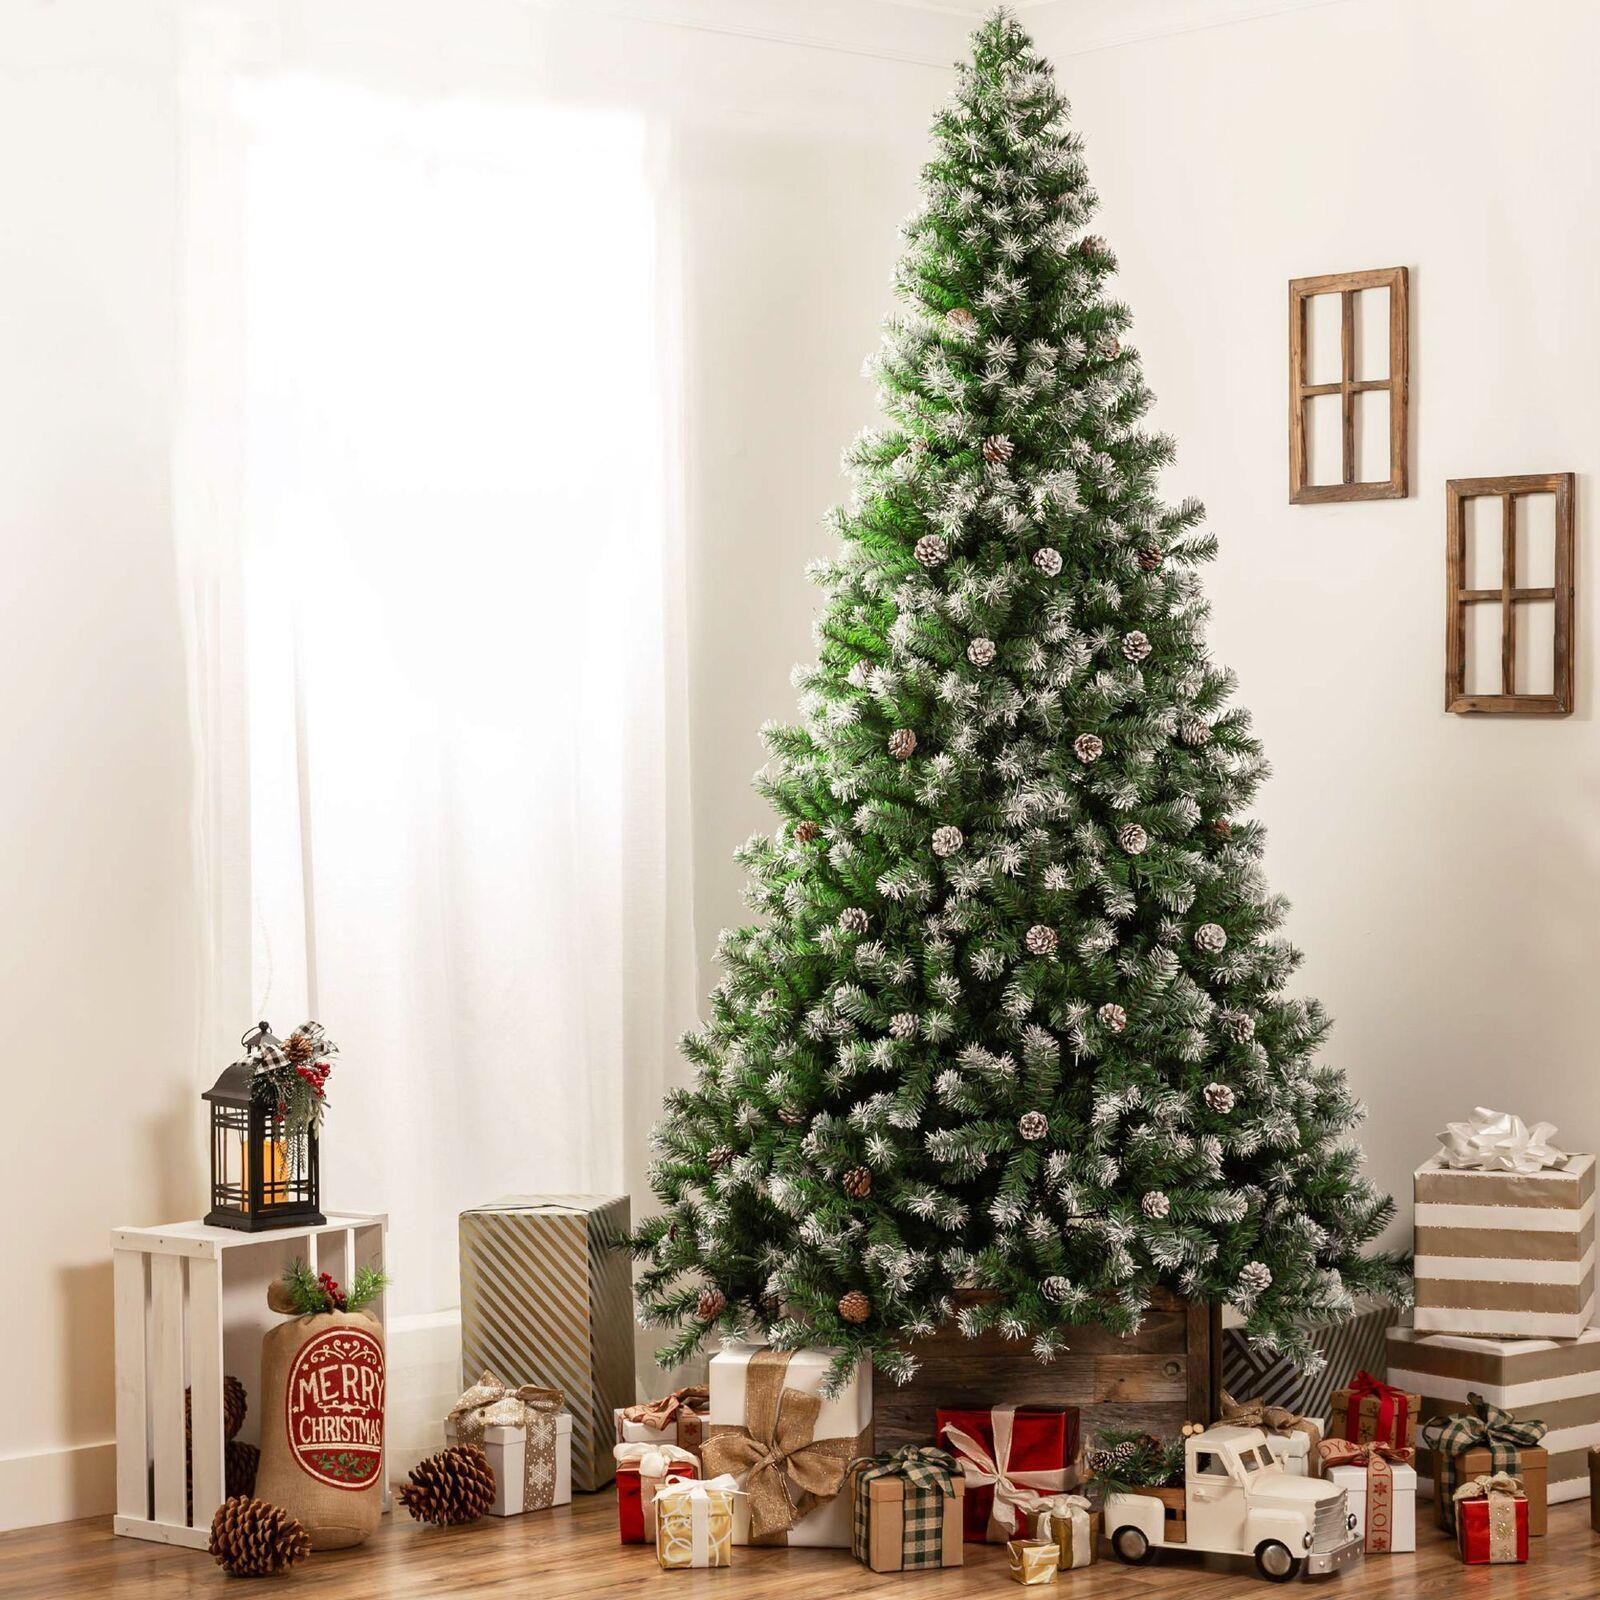 Festiva Christmas Tree 2.25m Snow Snowy Xmas Trees Pre-Decorated Decorations Home Decor 1400 Tips